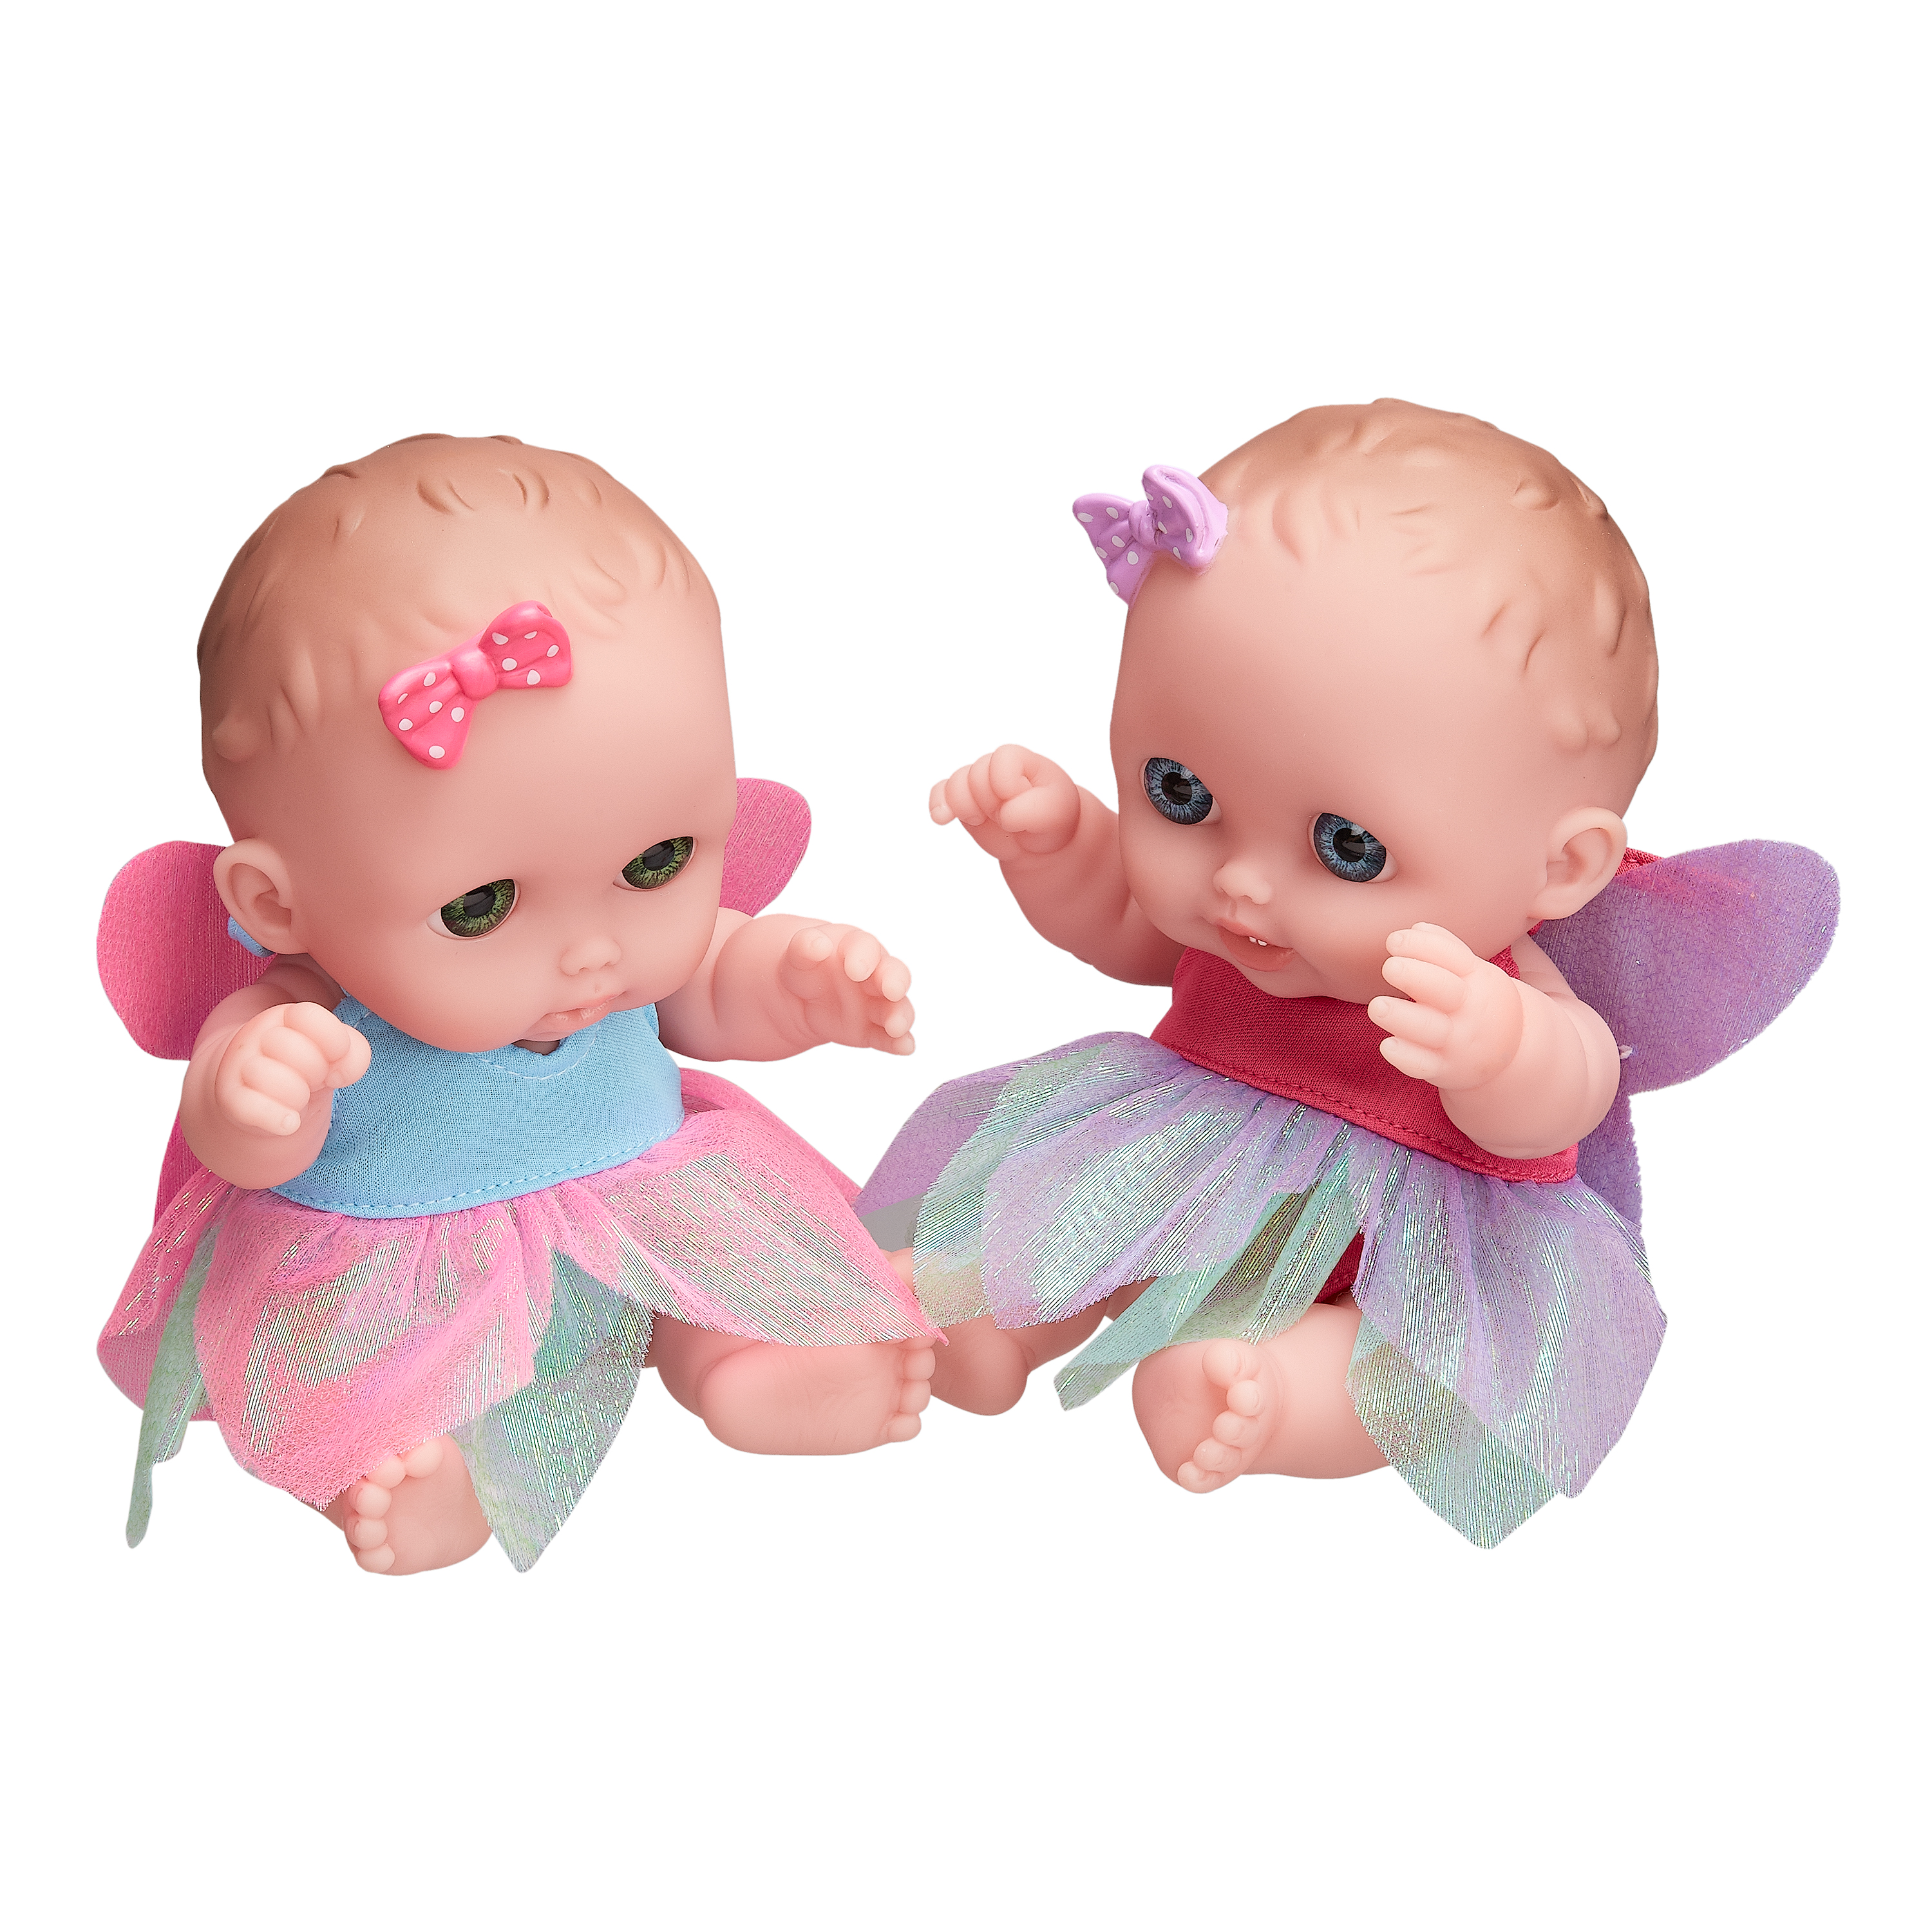 My Sweet Love Lots Lil Cutesies Twin Doll Fairy Tea Set - image 3 of 4